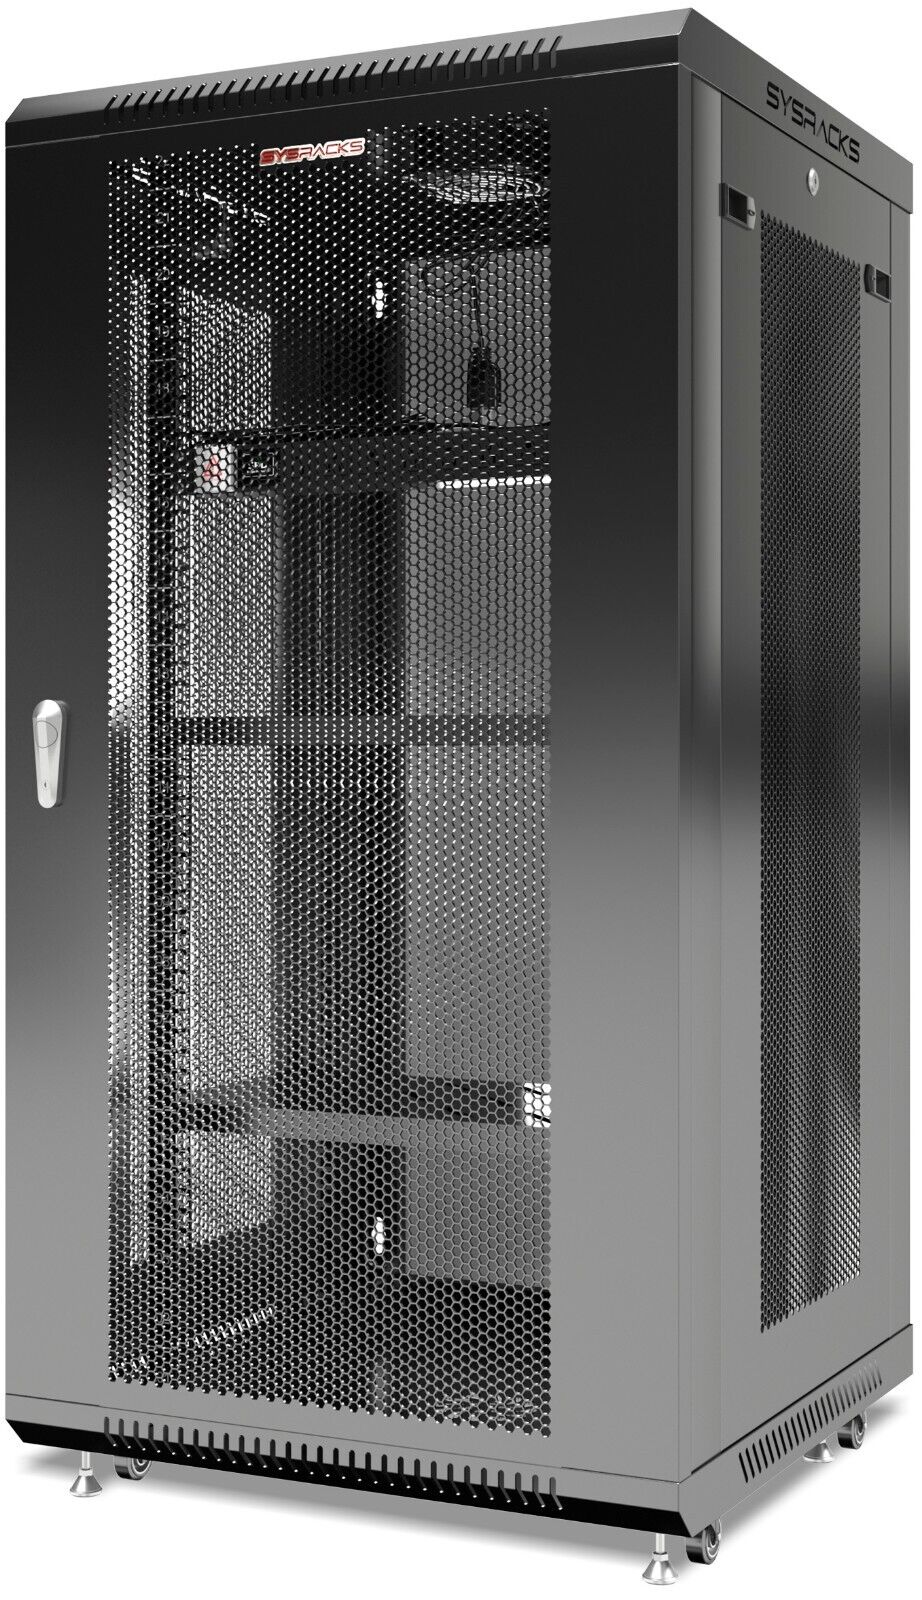 22U Wall Mount Server Rack Locking Network Cabinet Data IT Enclosure VENTED Door